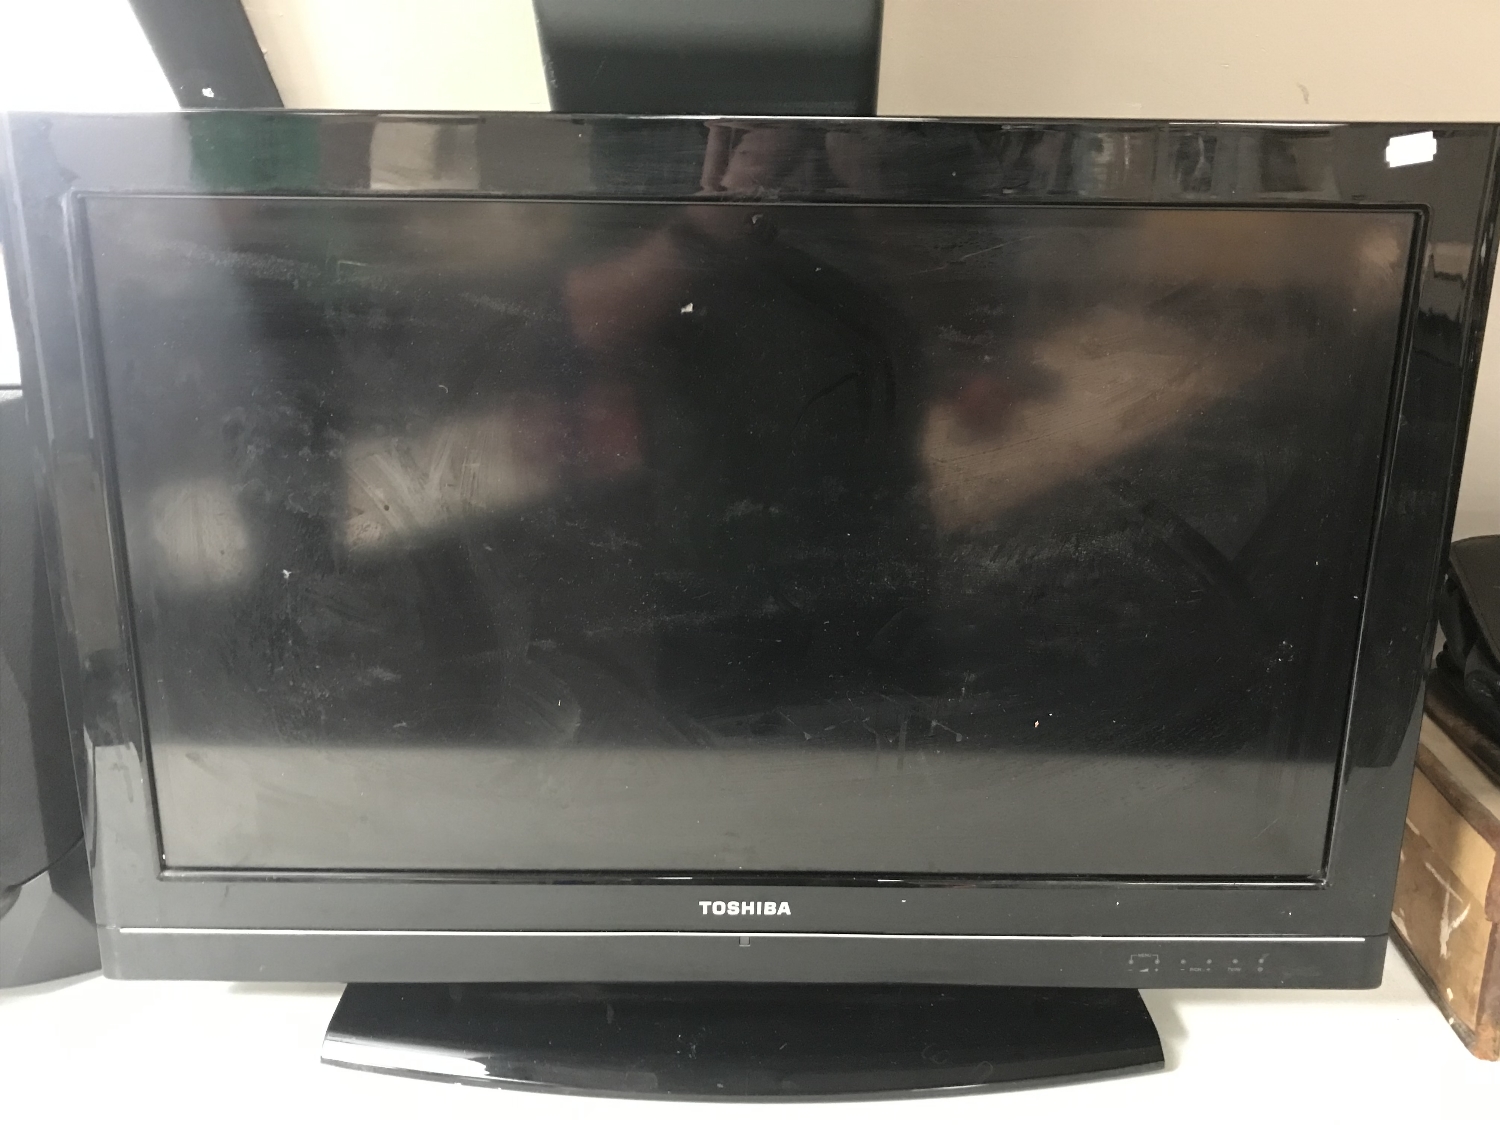 A Toshiba 32" LCD TV